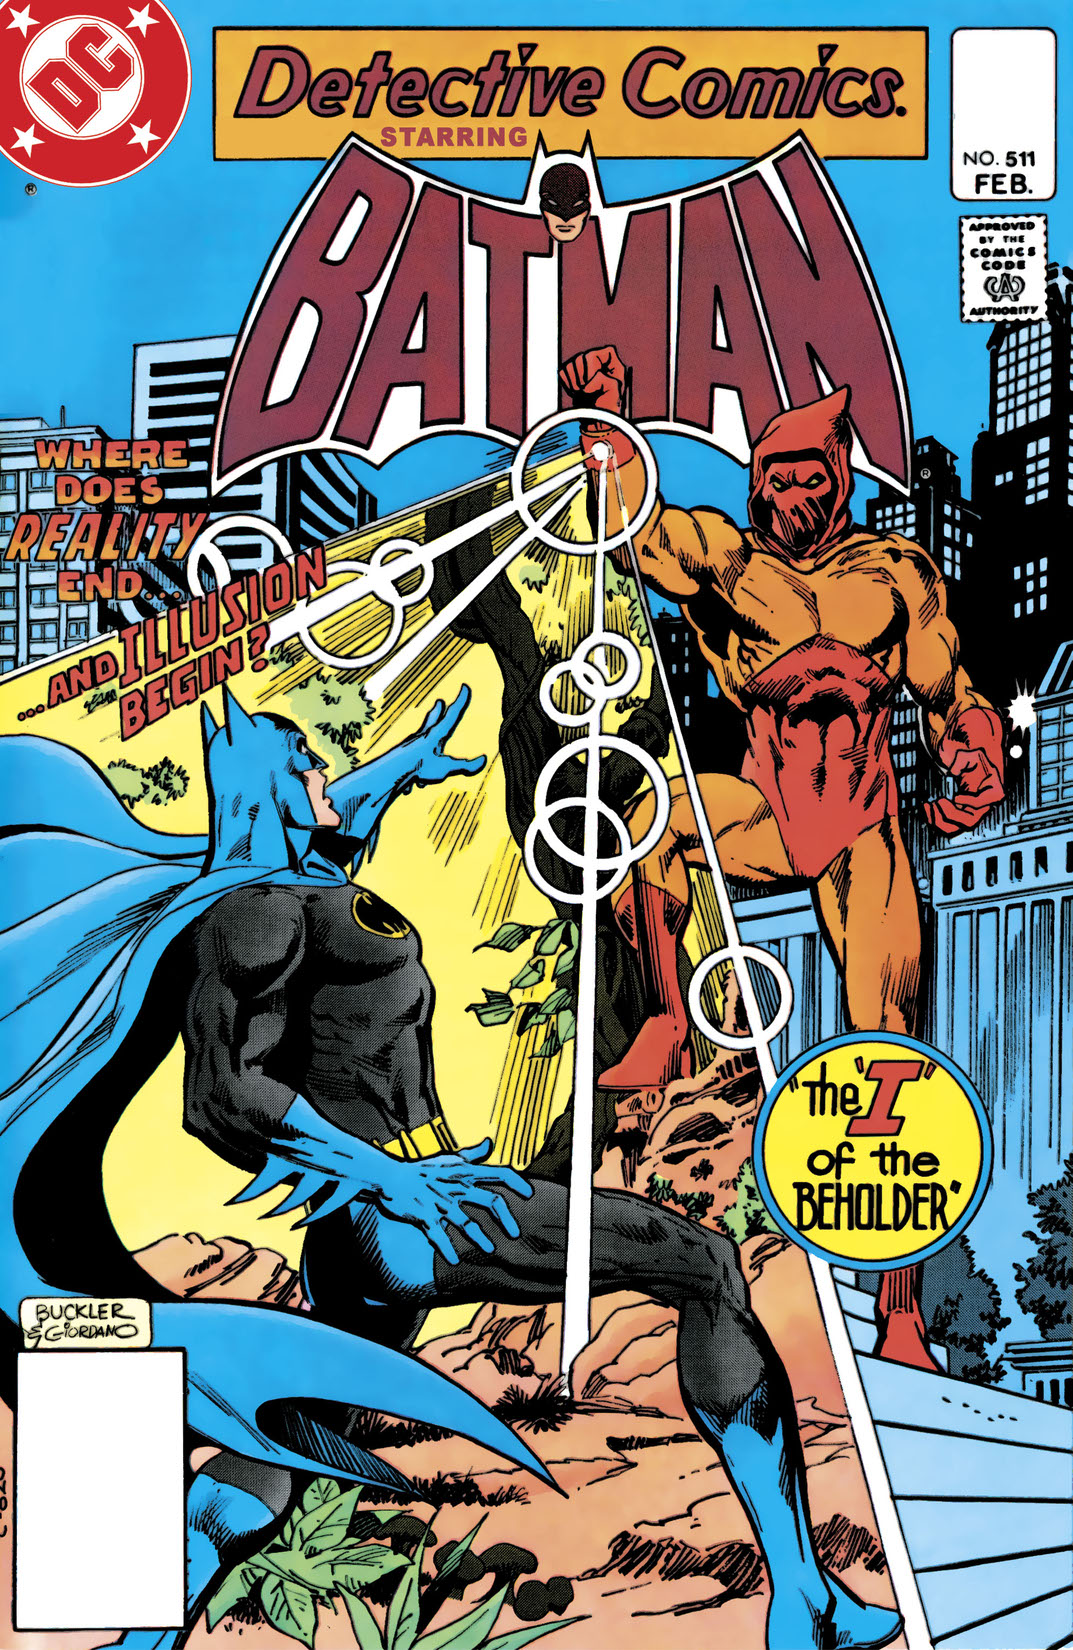 Detective Comics (1937-) #511 preview images